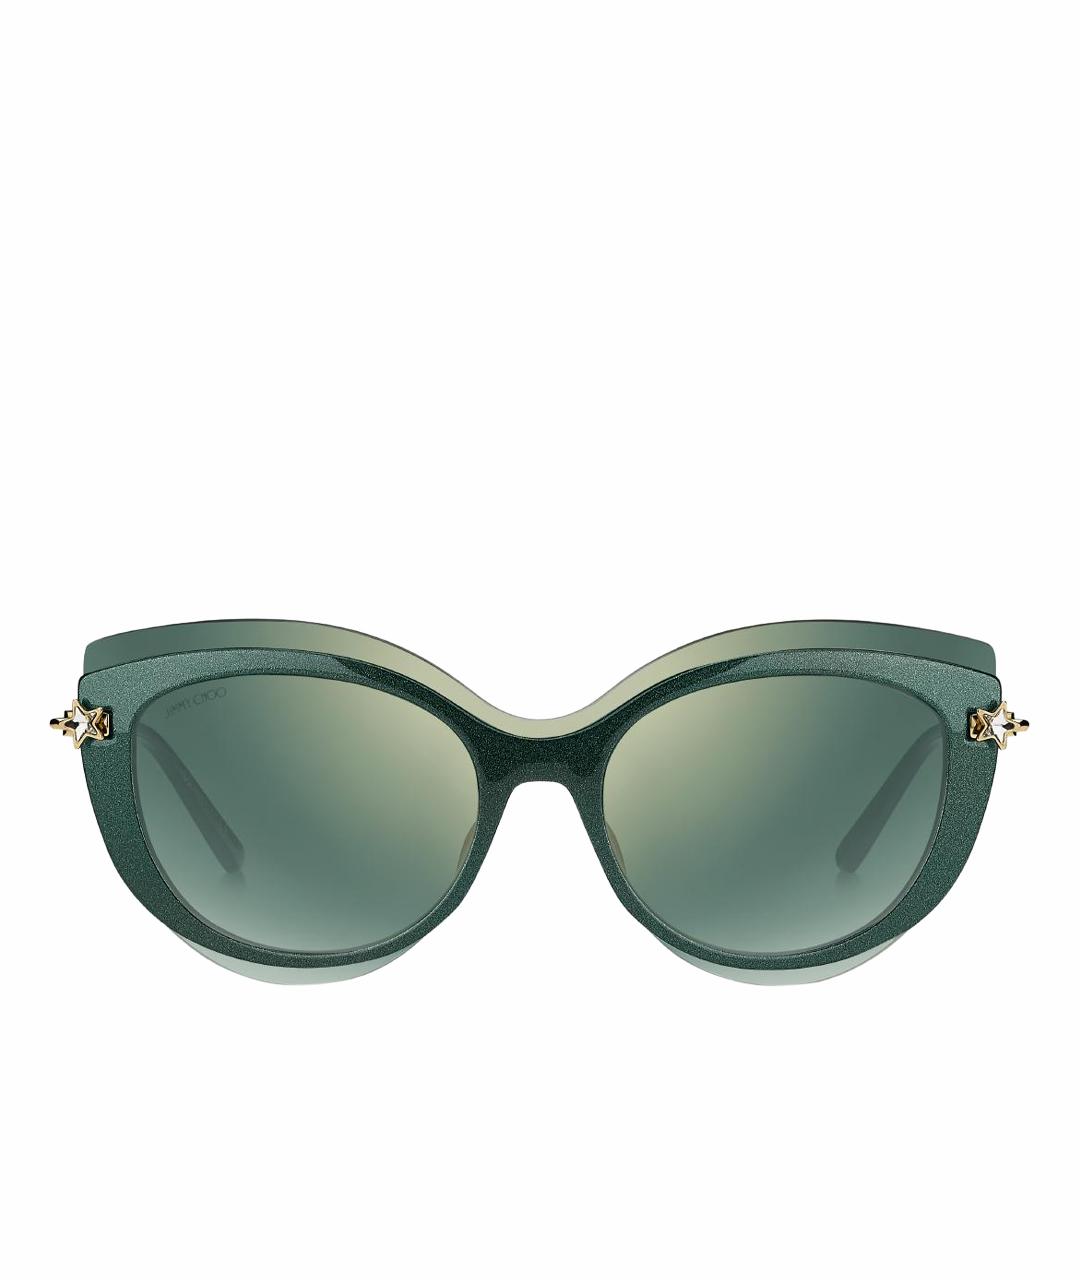 JIMMY CHOO Зеленые солнцезащитные очки, фото 1